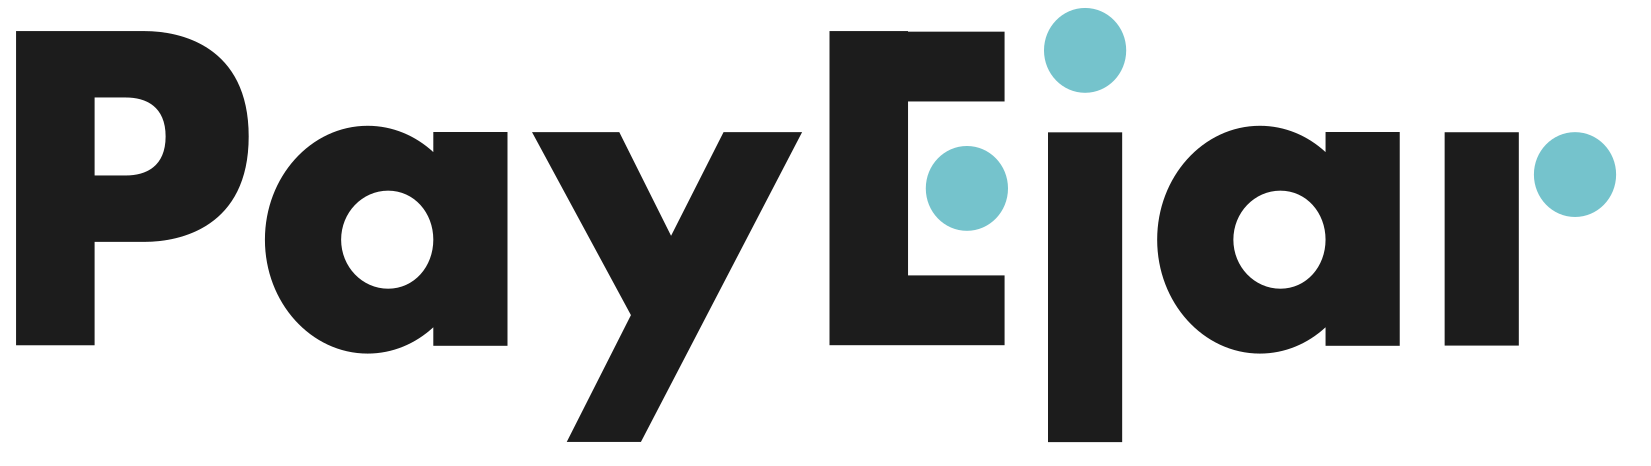 PayEjar̀ logo